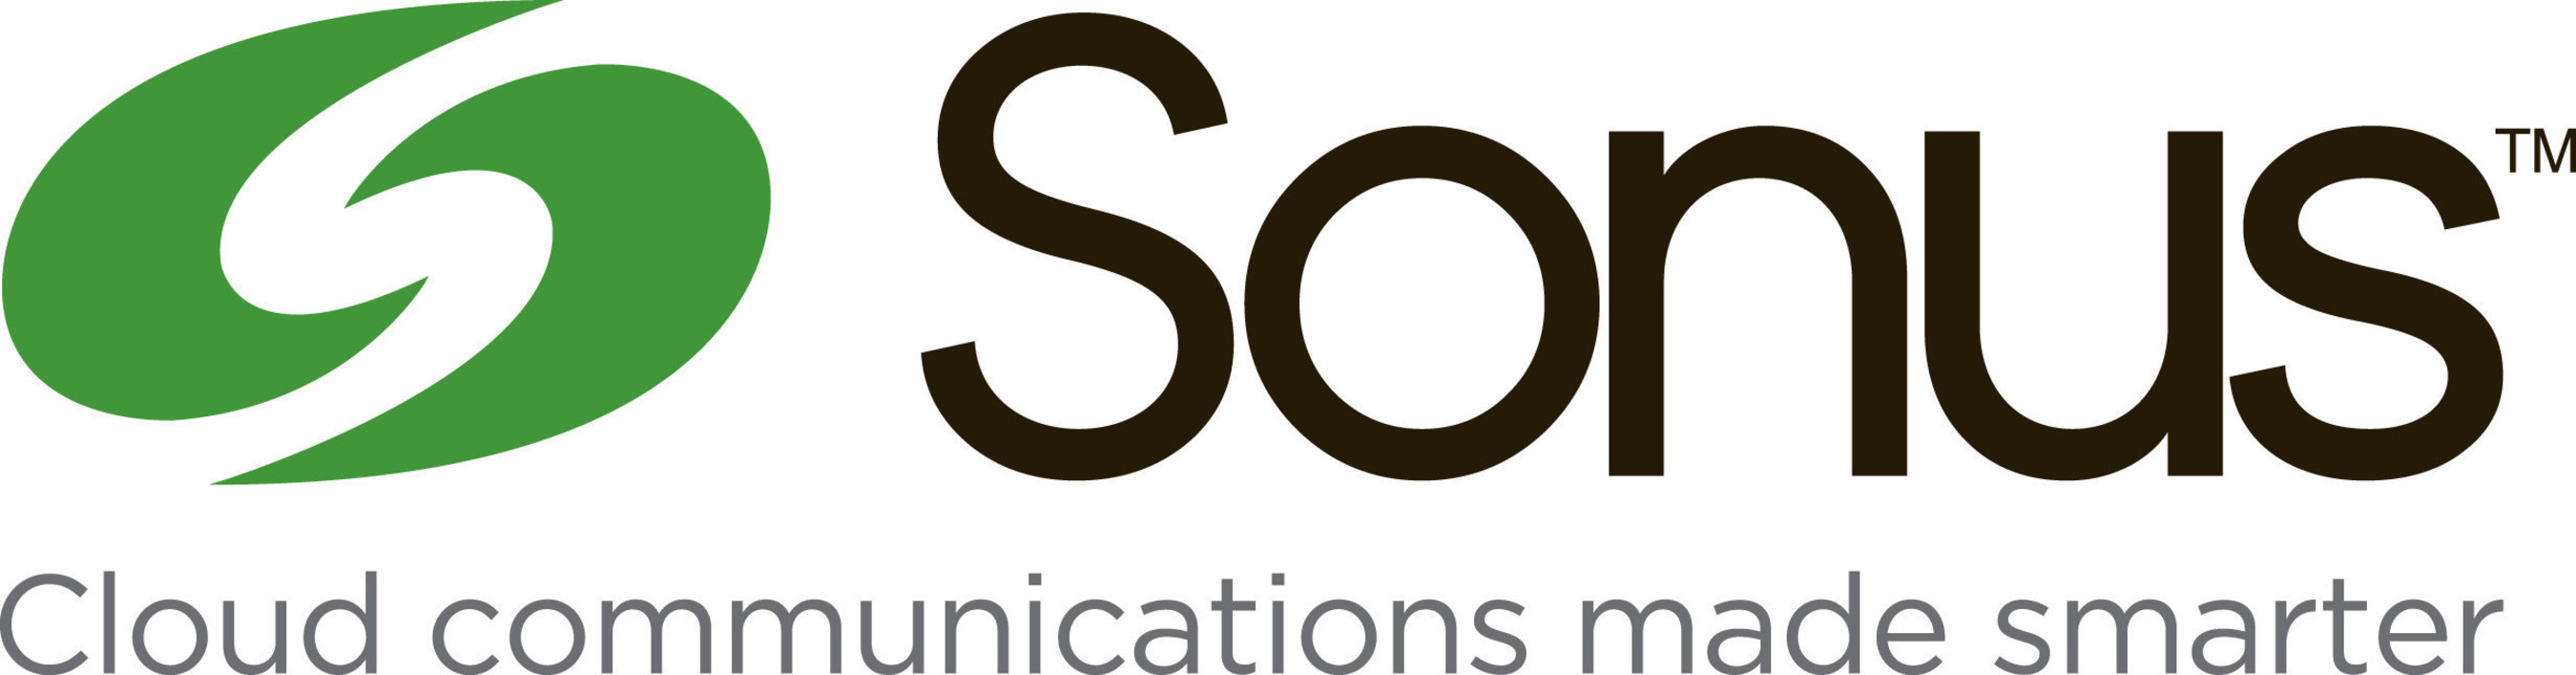 Sonus Networks, Inc. Corporate Logo. (PRNewsFoto/Sonus Networks, Inc.)